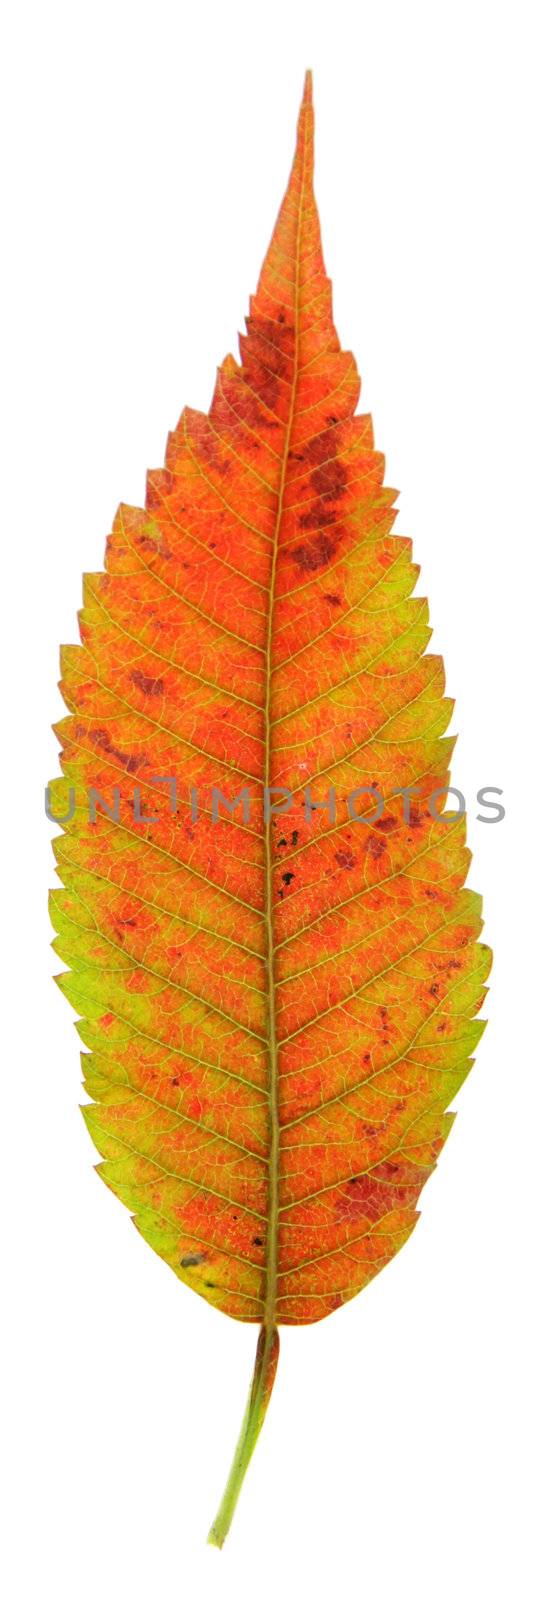 Red Staghorn Sumac Leaf by ca2hill